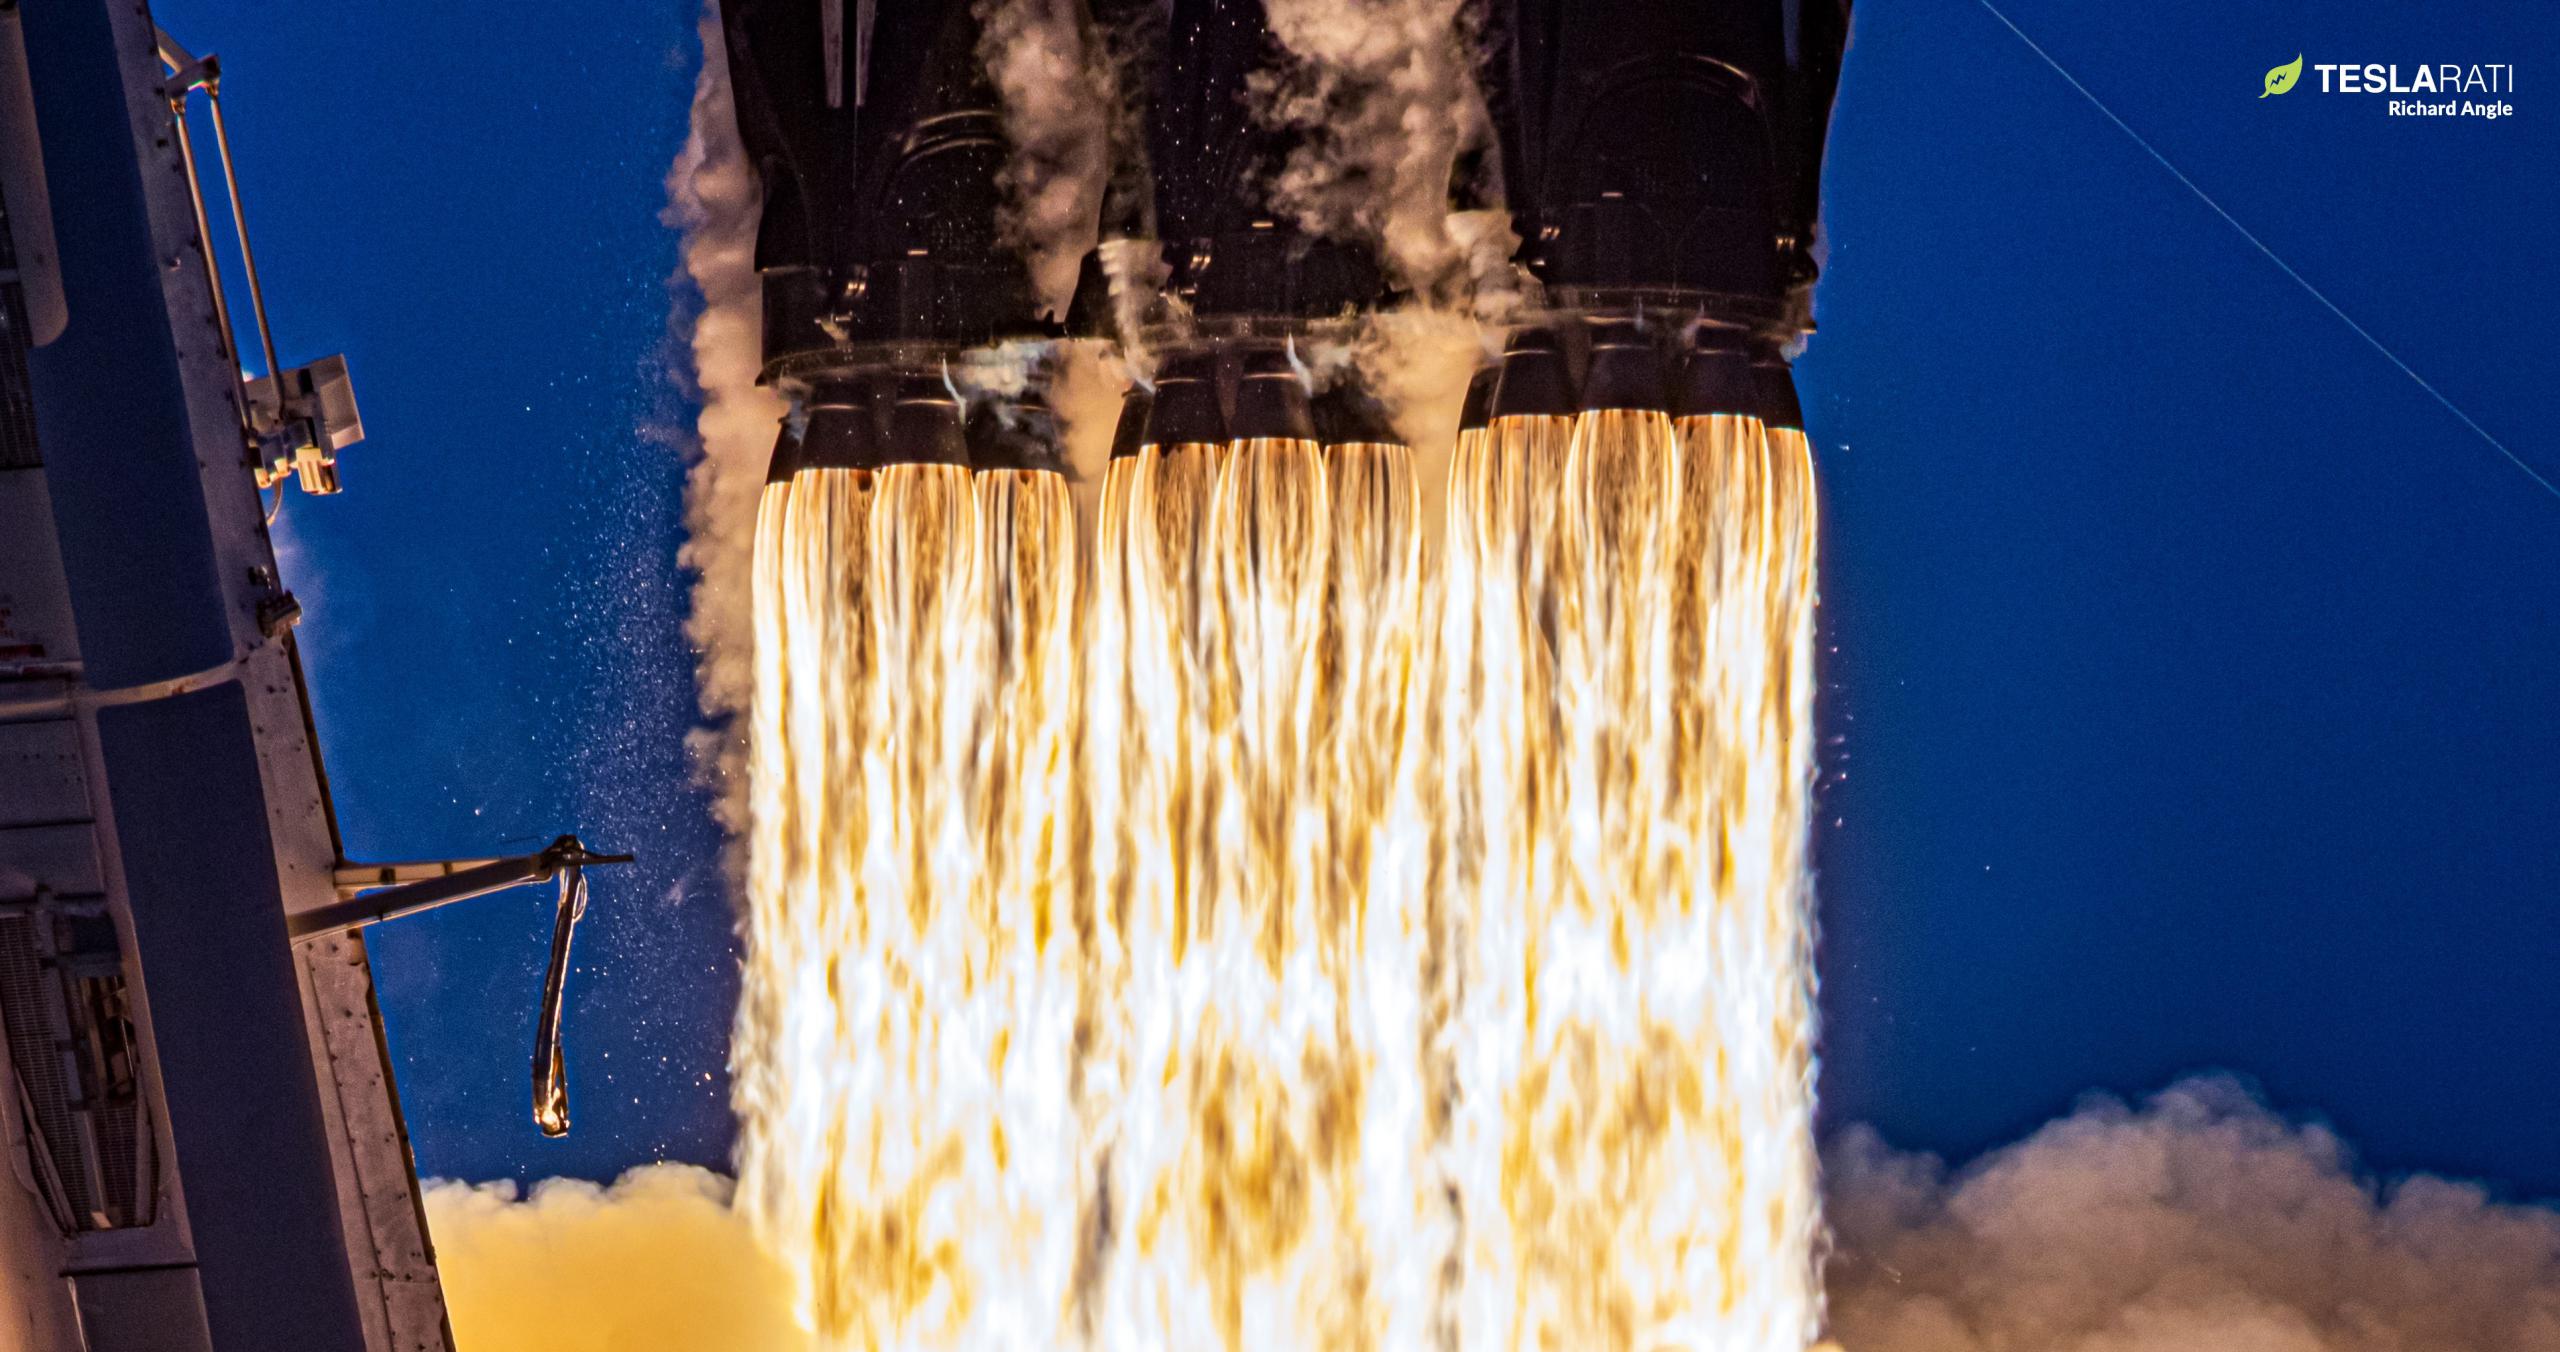 Arabsat 6A Falcon Heavy April 2019 (Richard Angle) 2 crop (c)